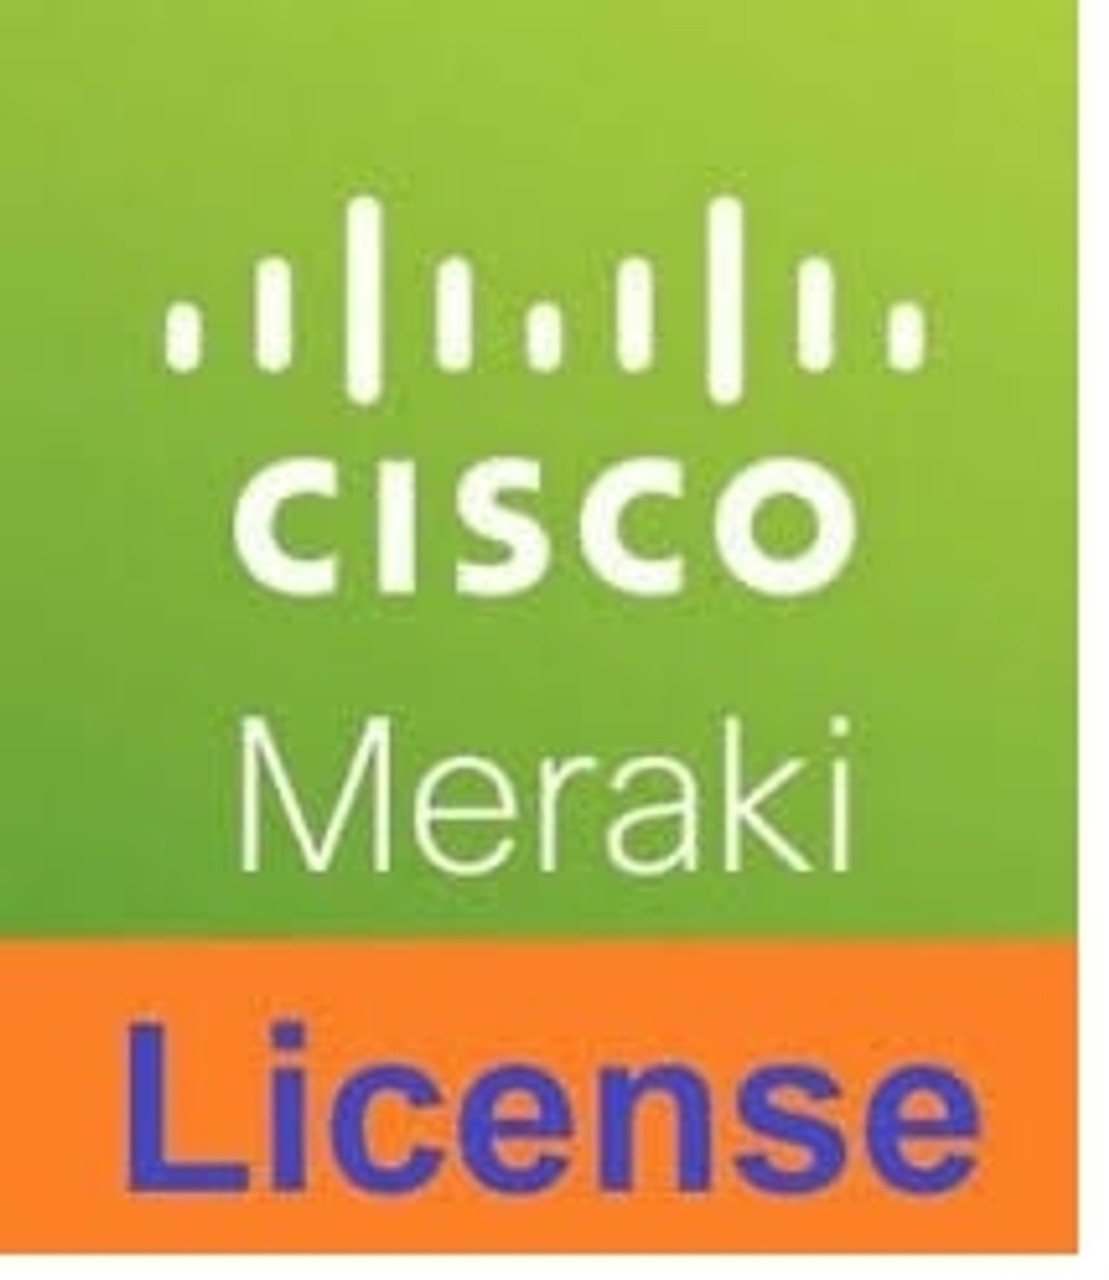 Meraki MX64W Router/Security Appliance with 802.11ac